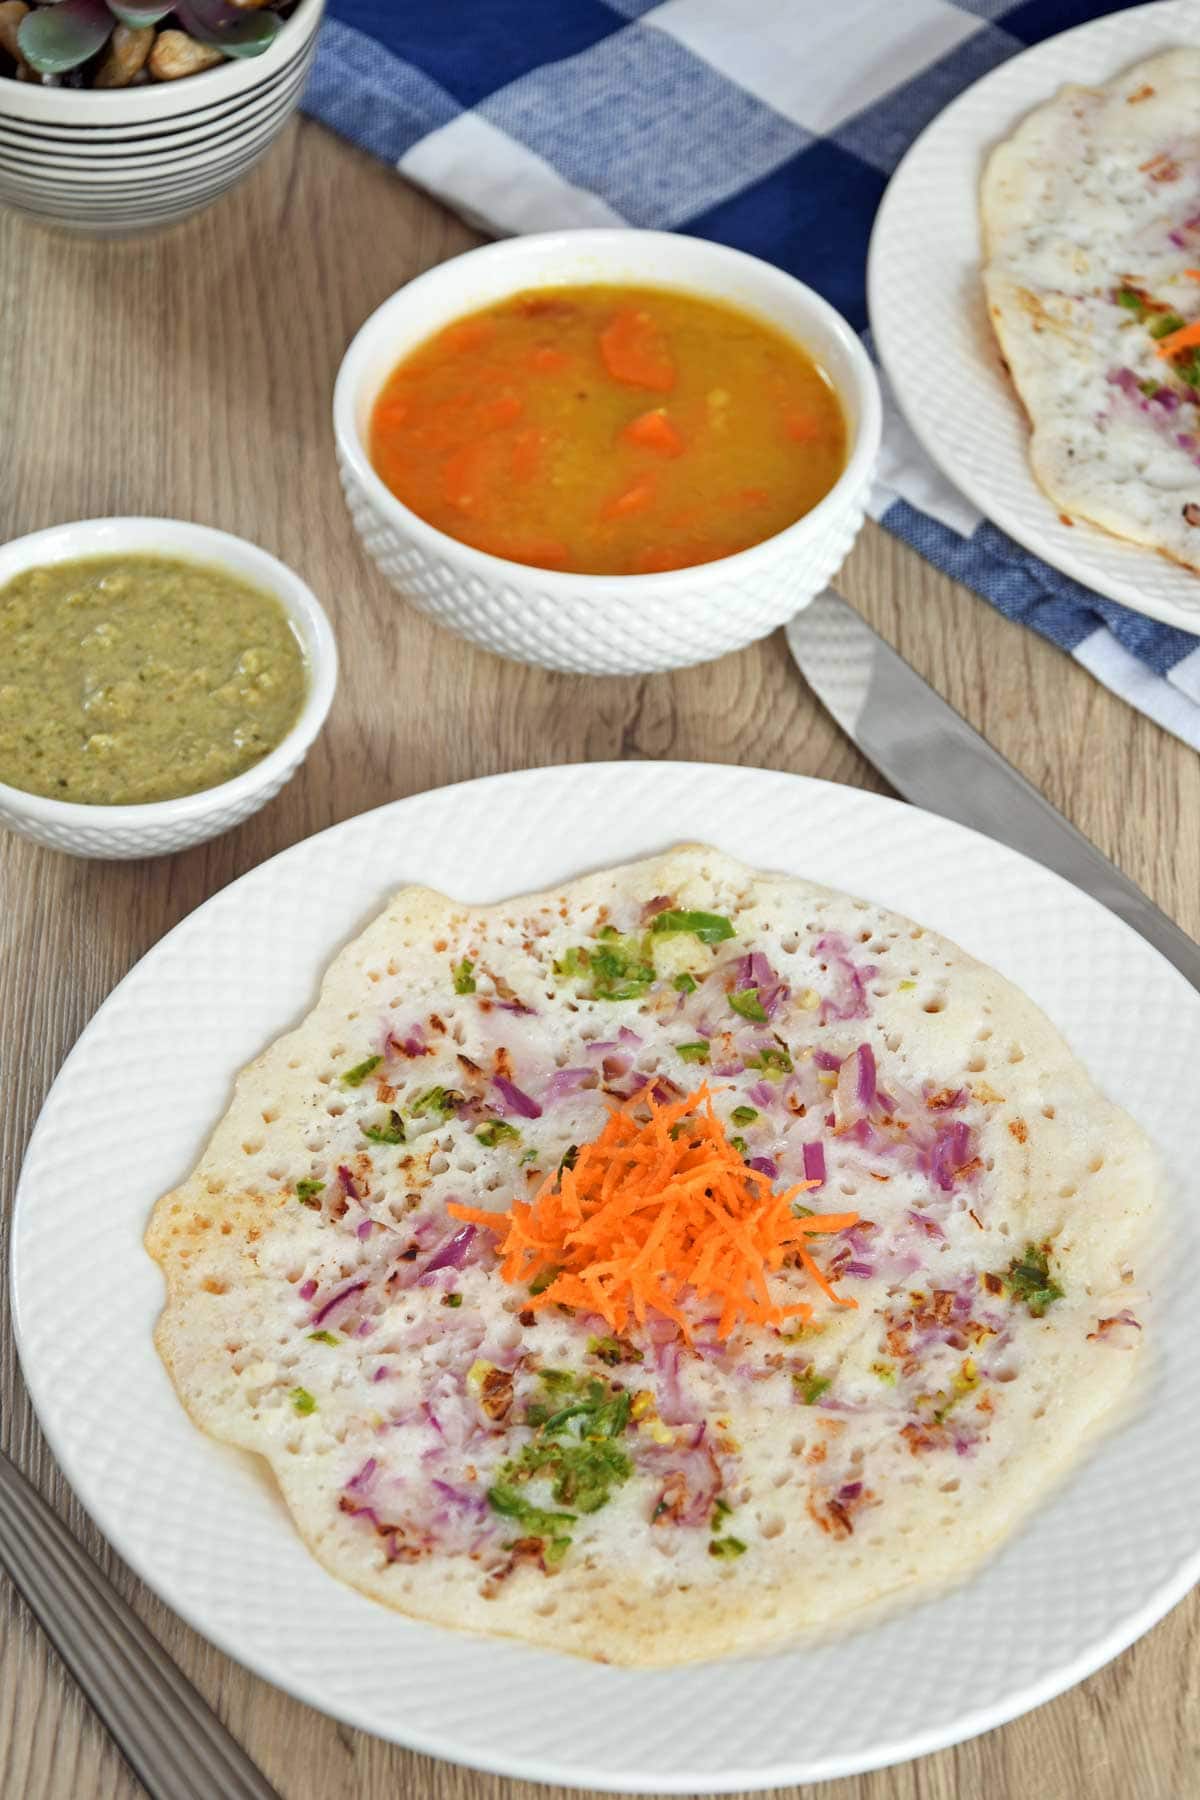 Uthappam served on plate with sambhar and chutney.